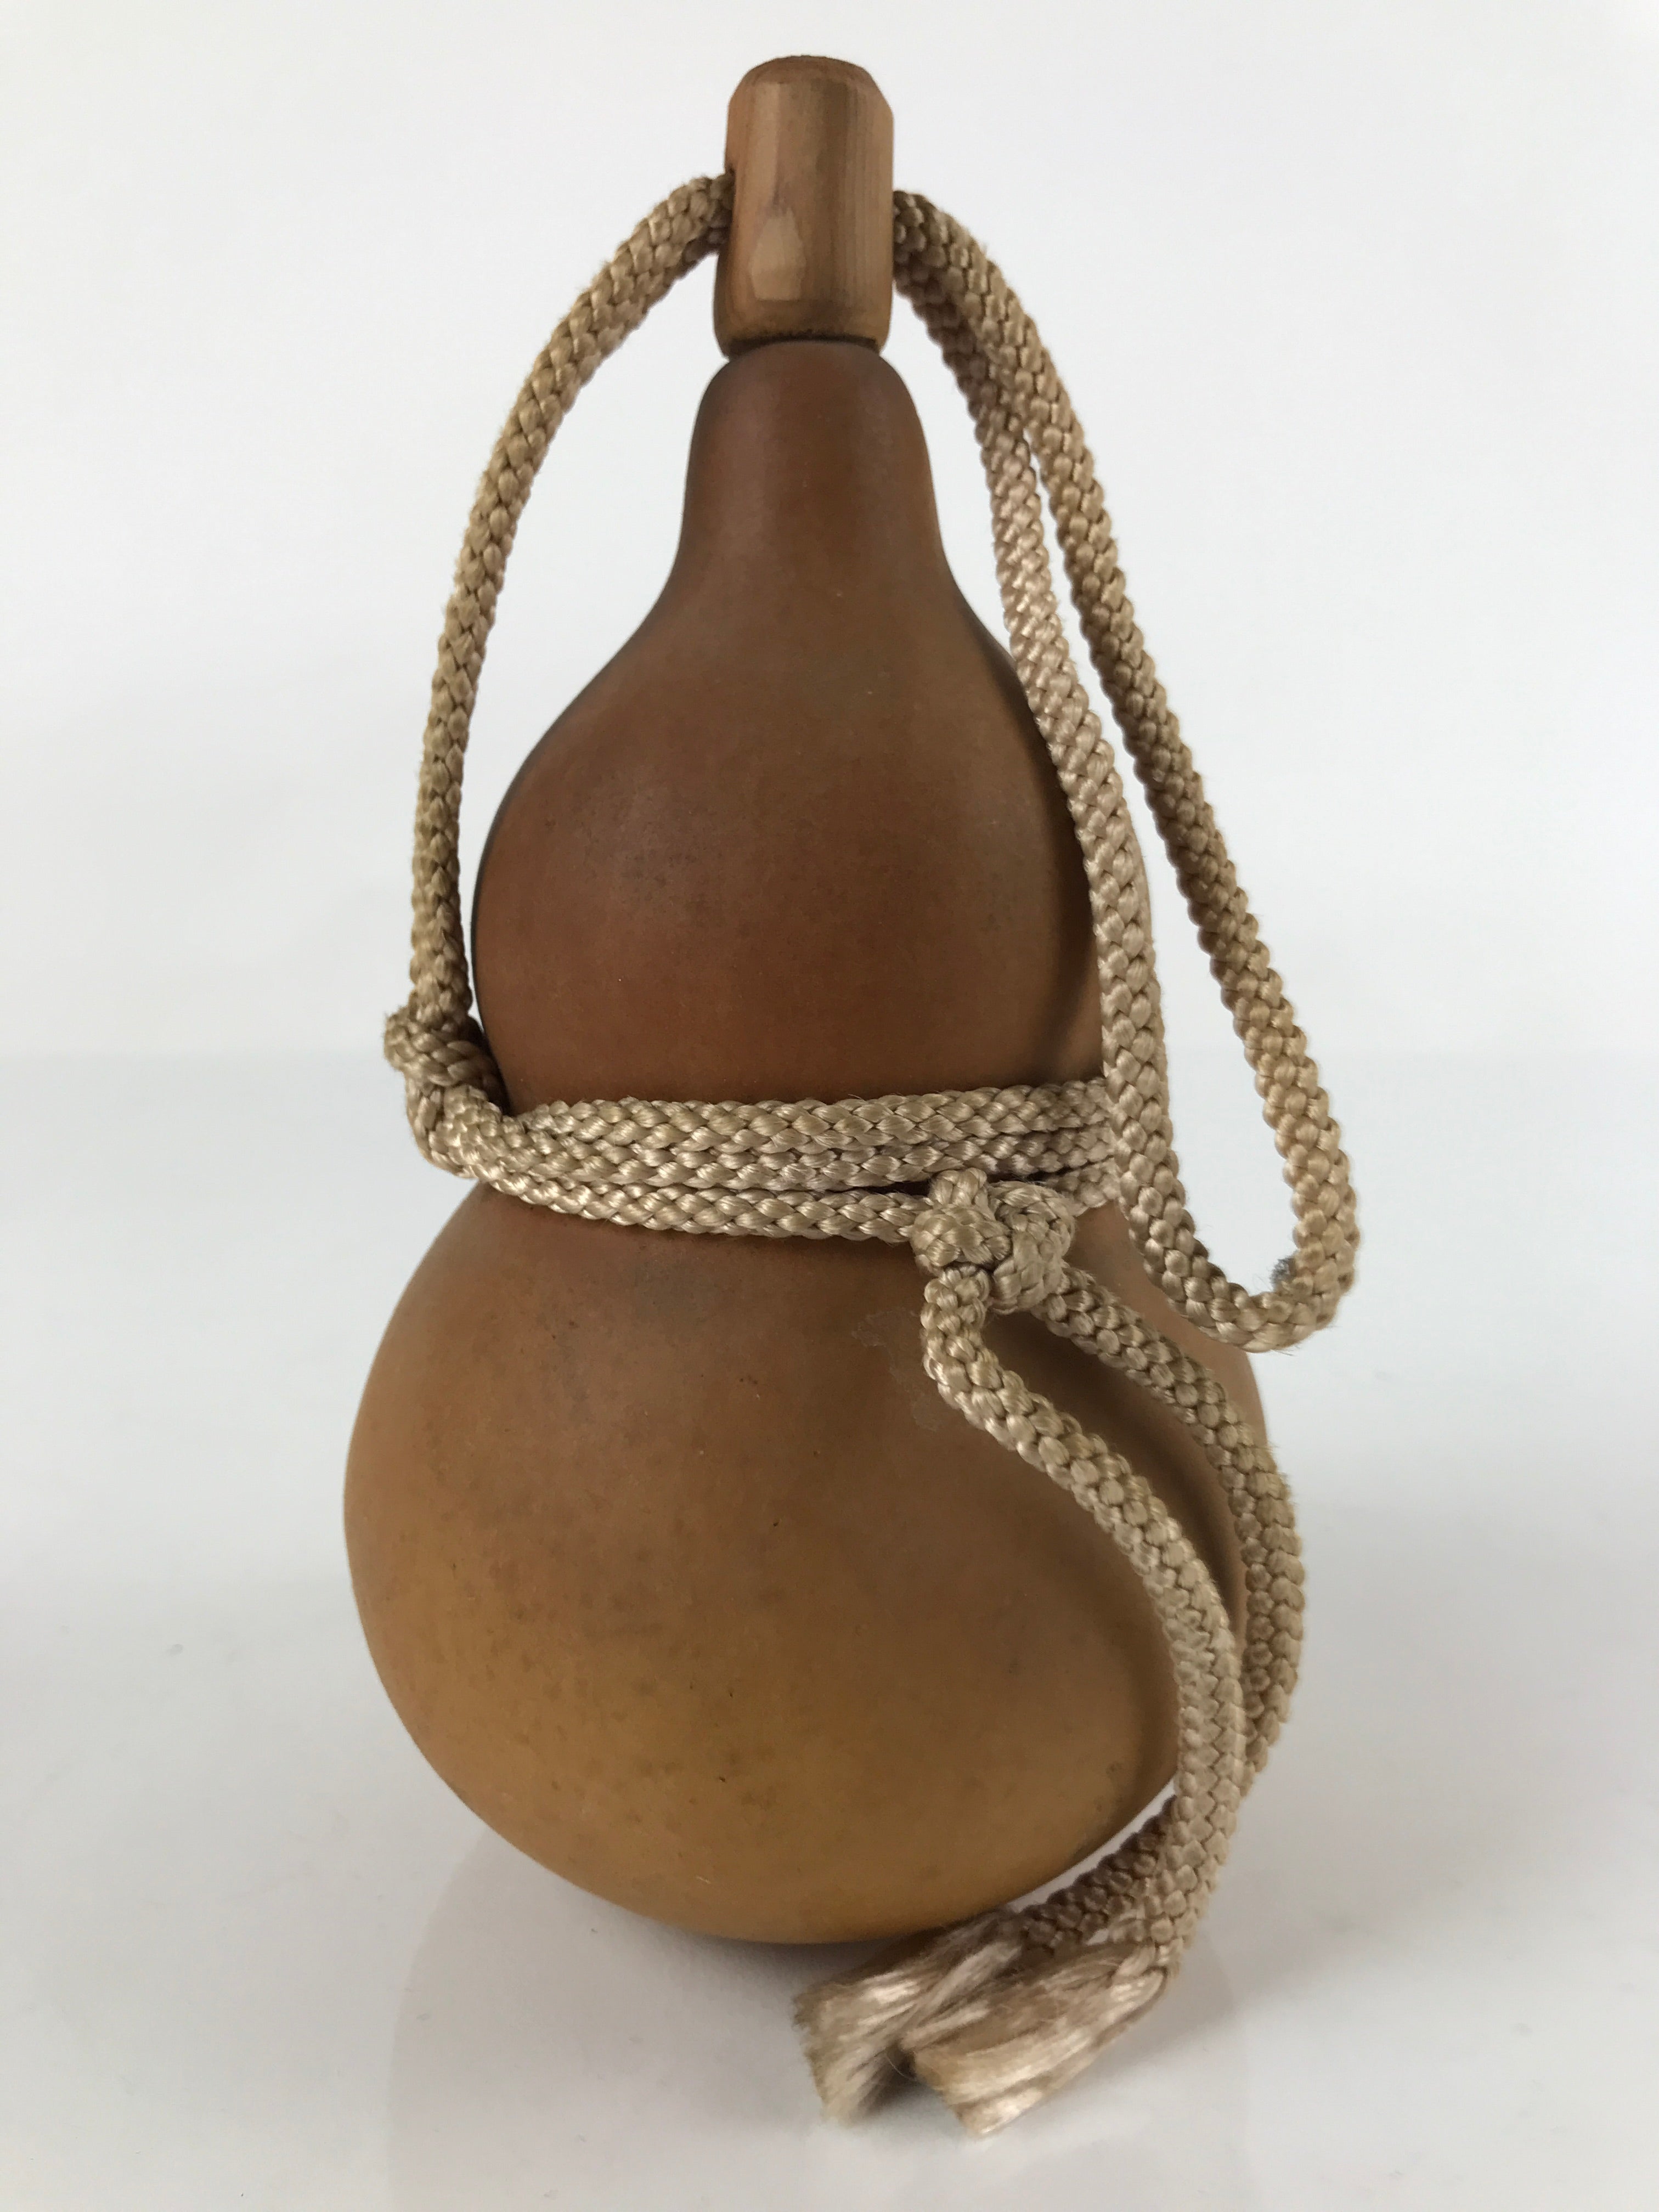 Japanese Natural Hyotan Gourd Vtg Sake Bottle Lucky Charm Calabash Lidded G259